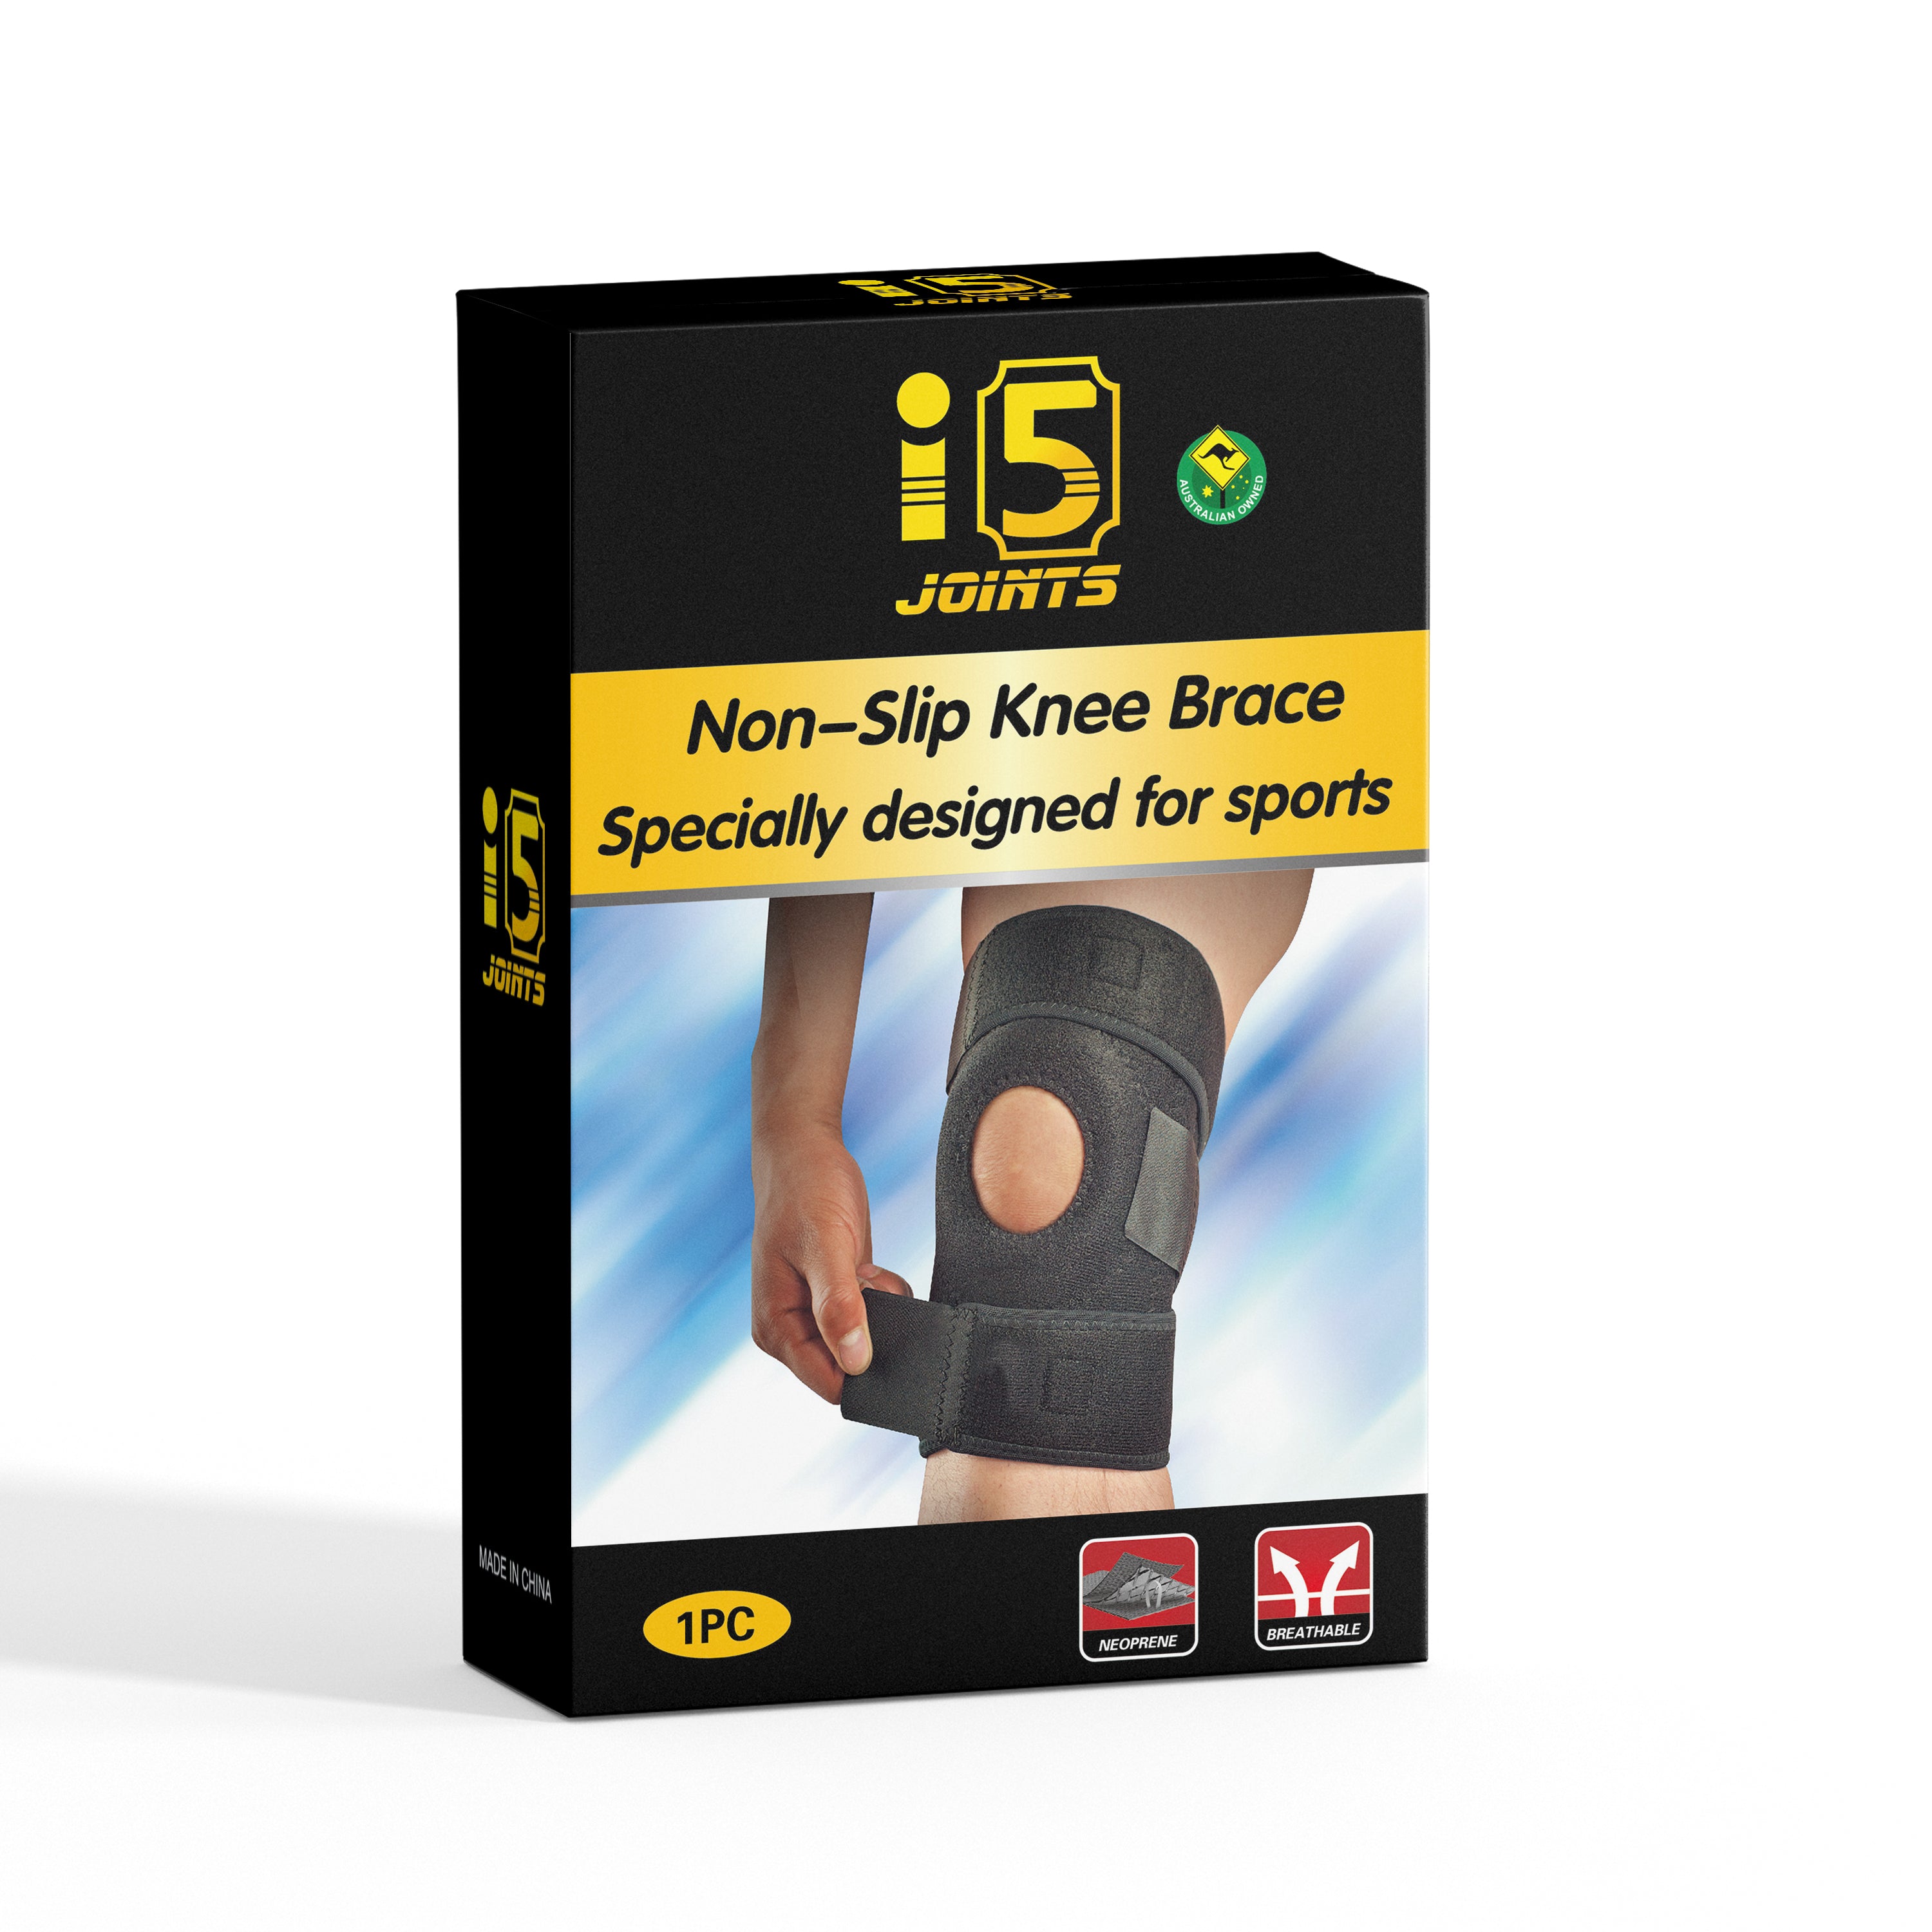 I5Joints-Non Slip Knee Brace-Specially Designed for Sports(Premium Knee Support Open Patella, Breathable Knee Cap Brace for Arthritis, Pain Relief, Sports for Men & Women)